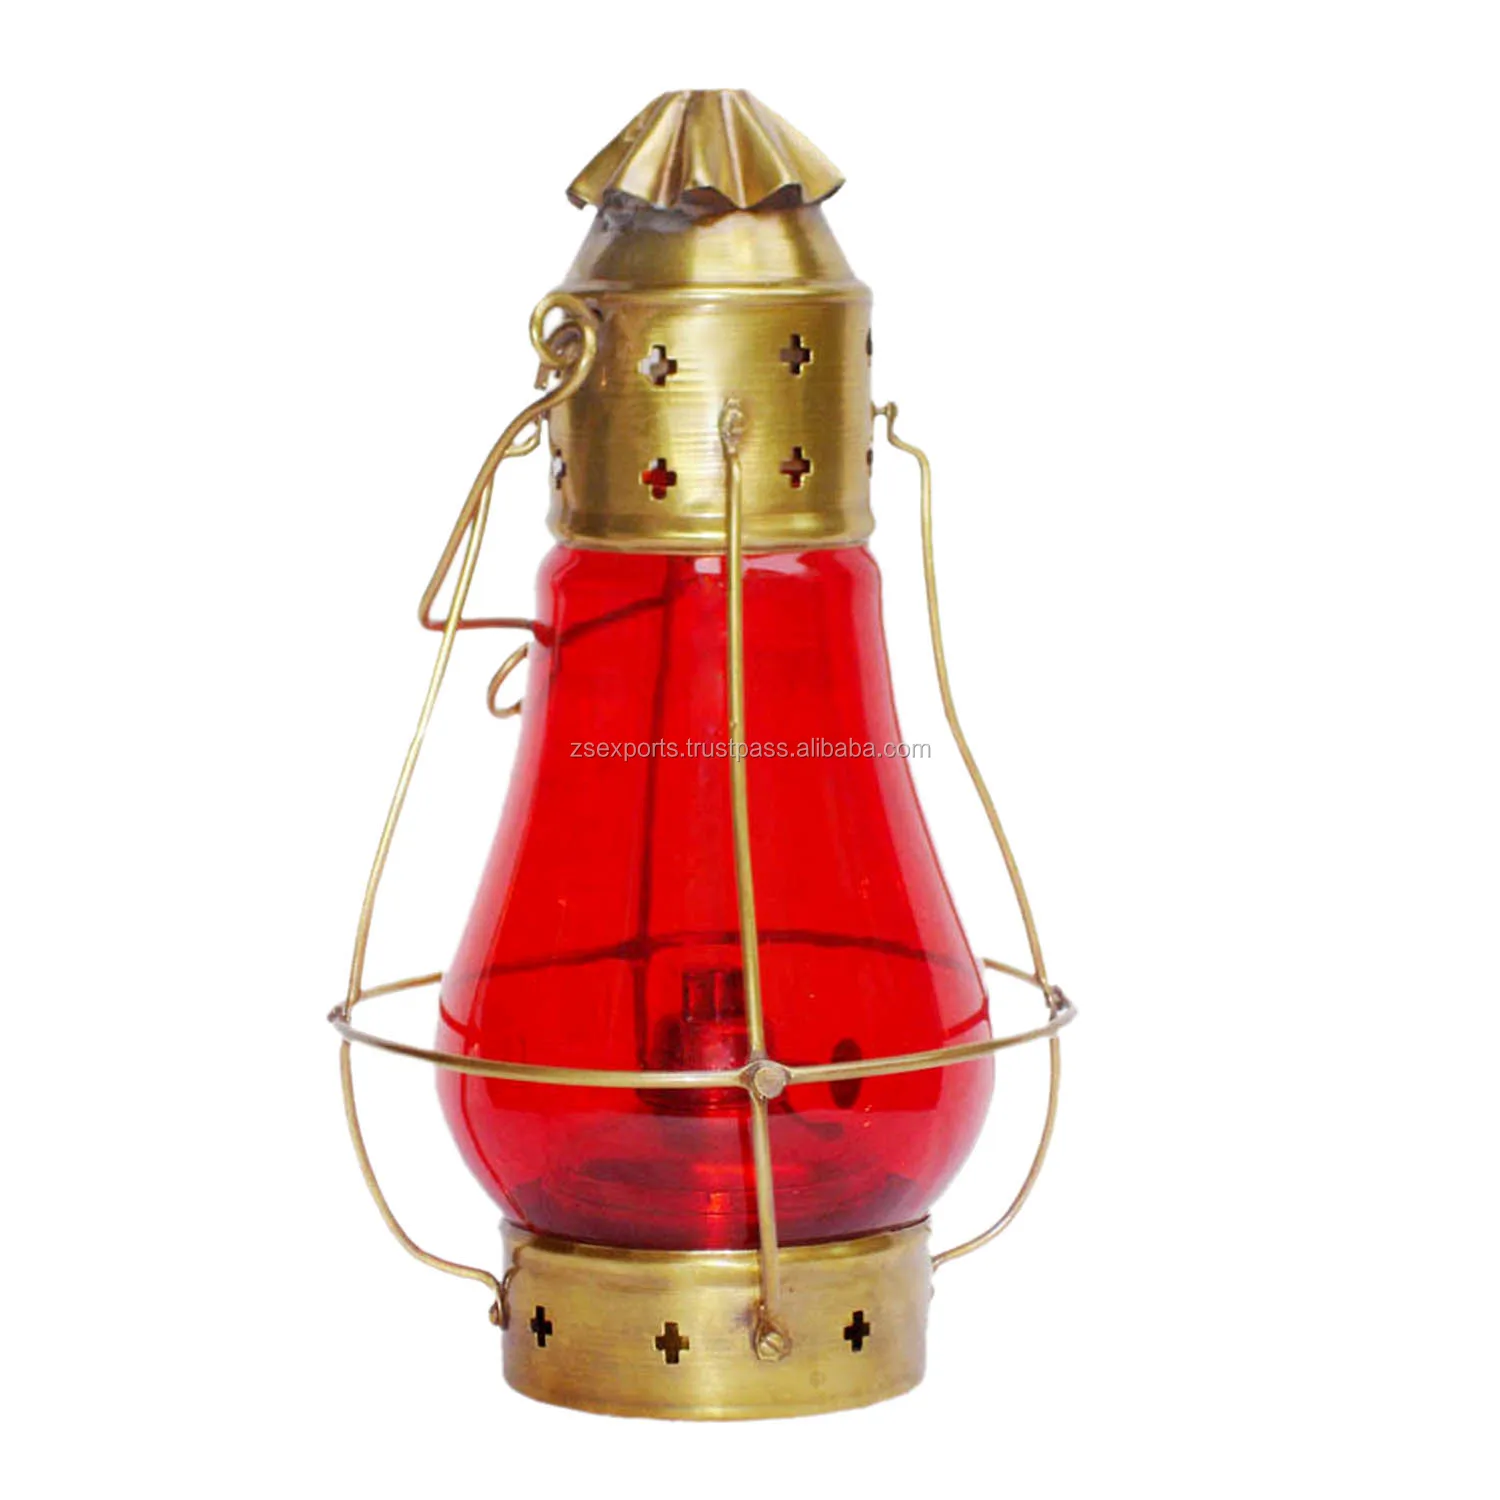 Details about   Antique Marine Anchor Decorative Oil Lamp Nautical Ship Lantern Antique Finish 